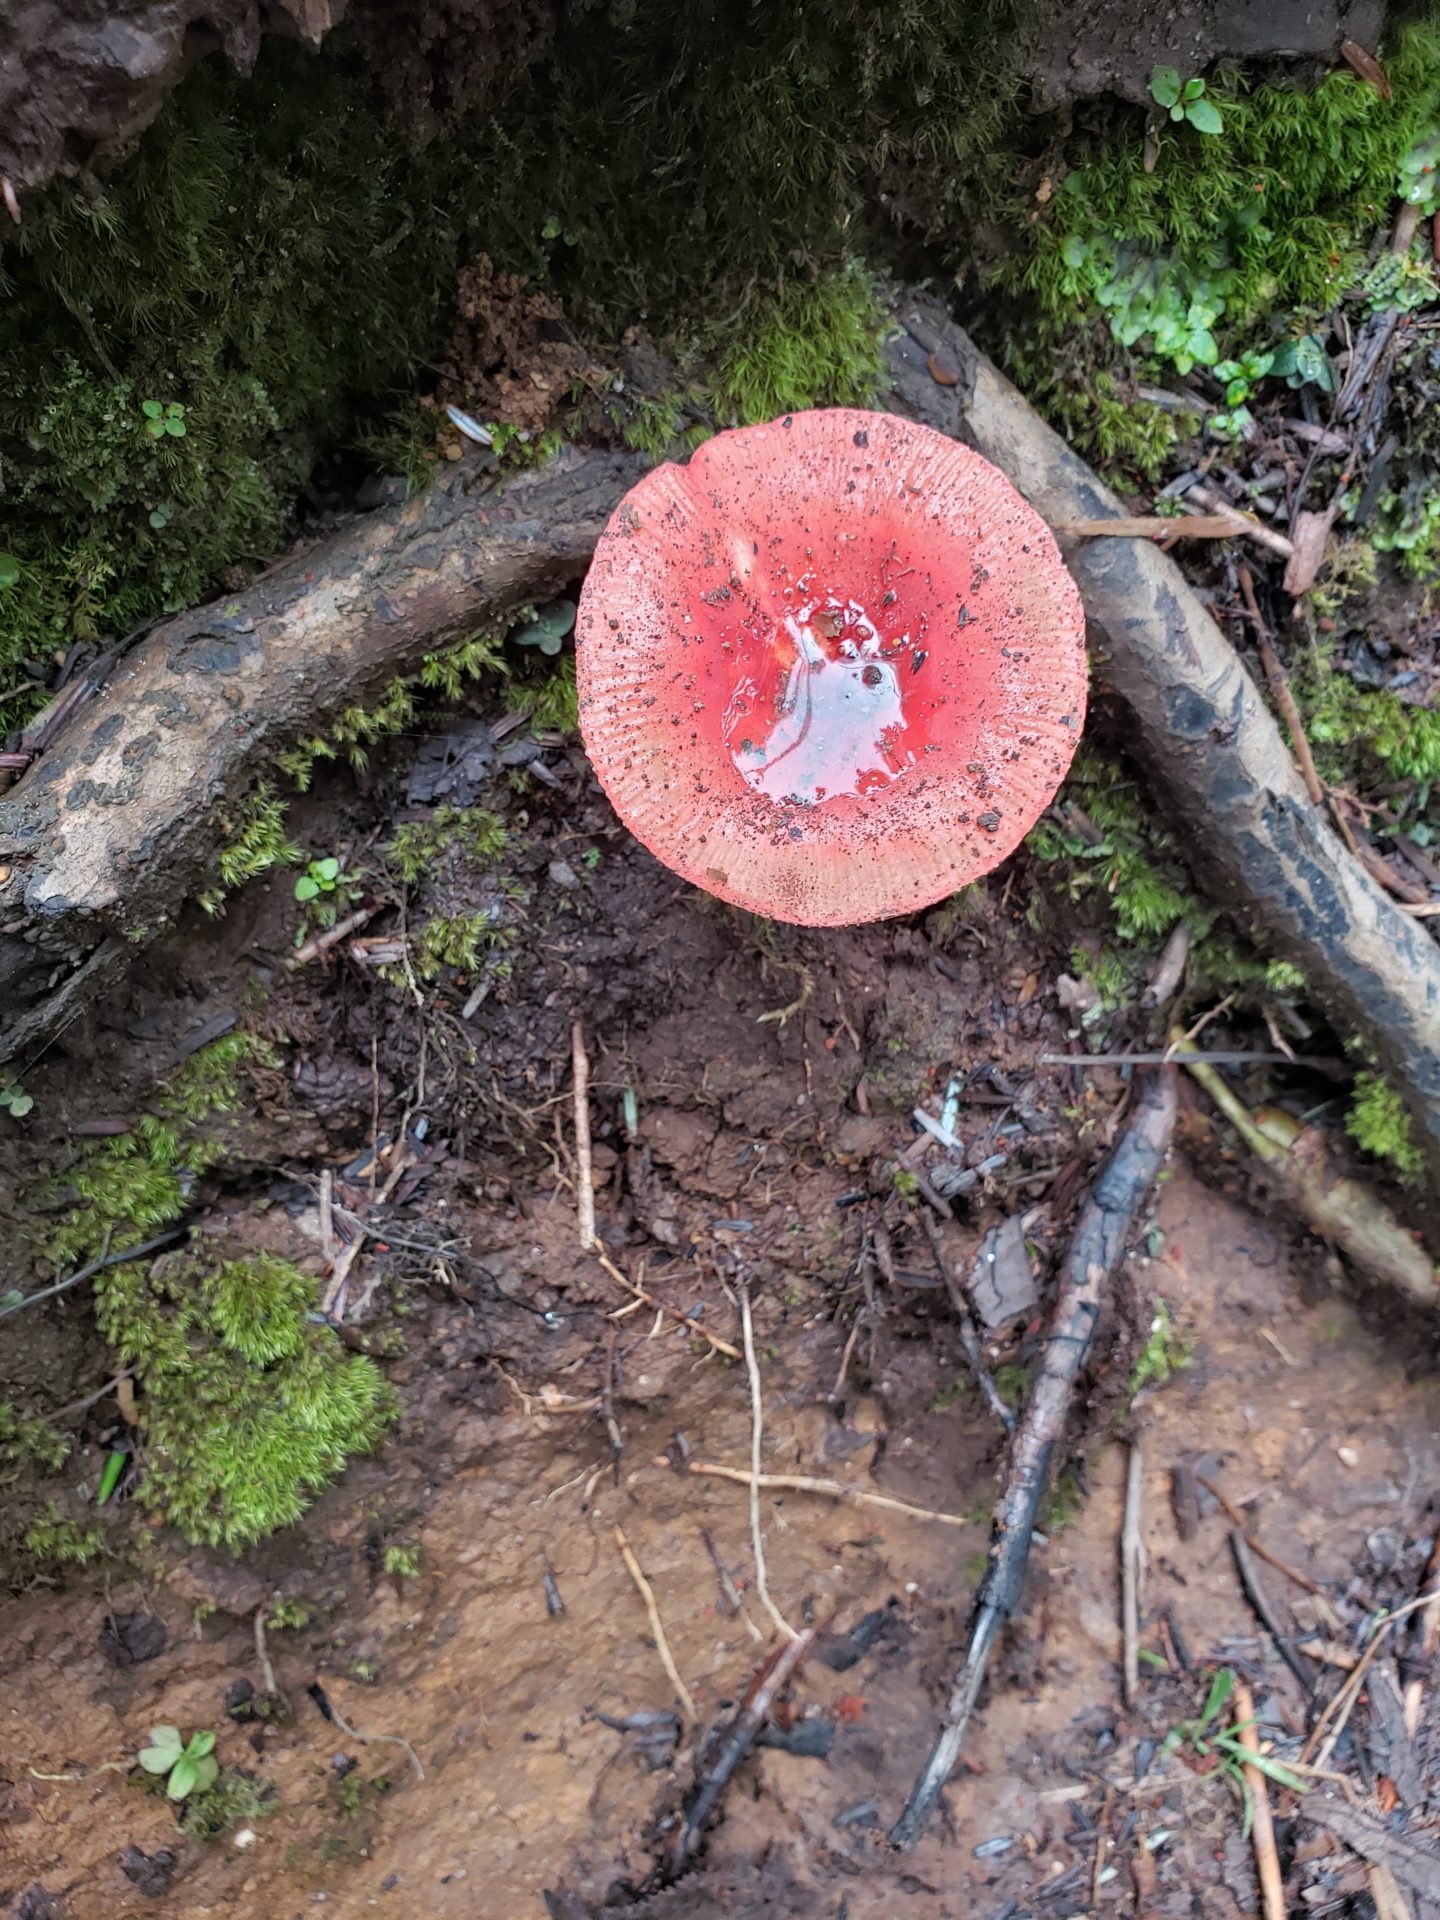 a mushroom growing on the ground